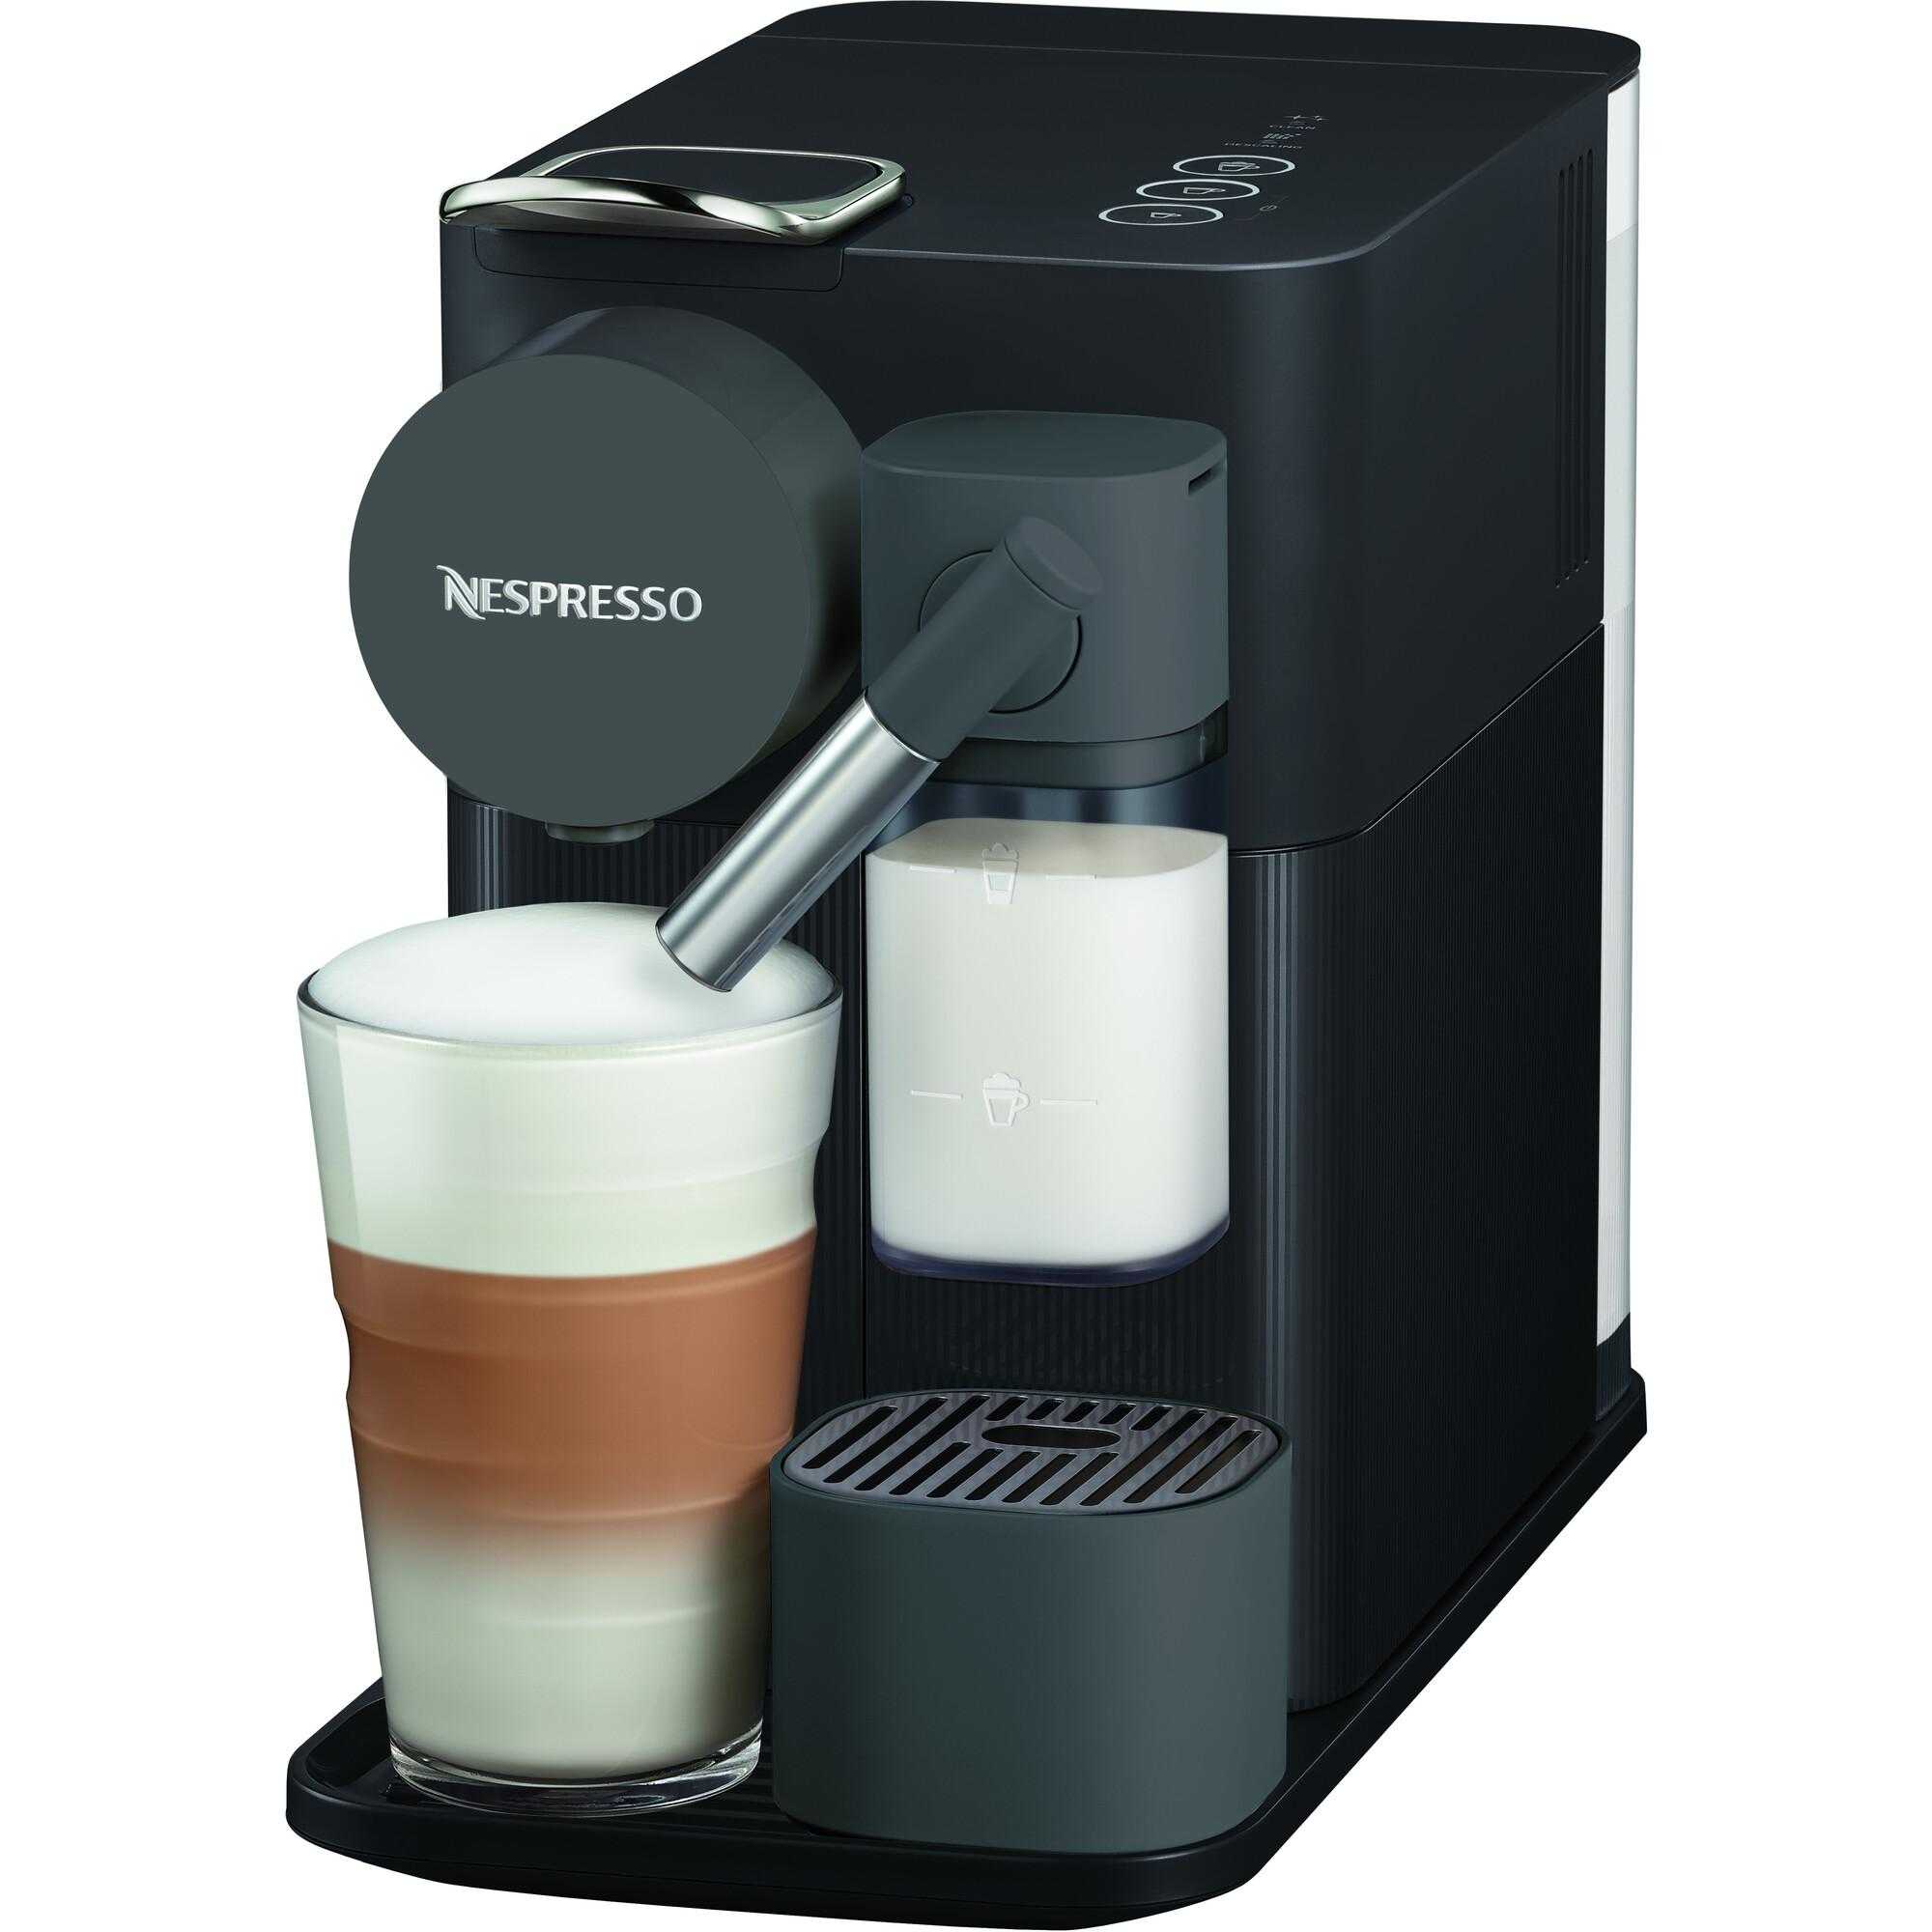  Espressor Nespresso Latissima One EN500, 1300 W, 1 L, 19 bar, Negru 